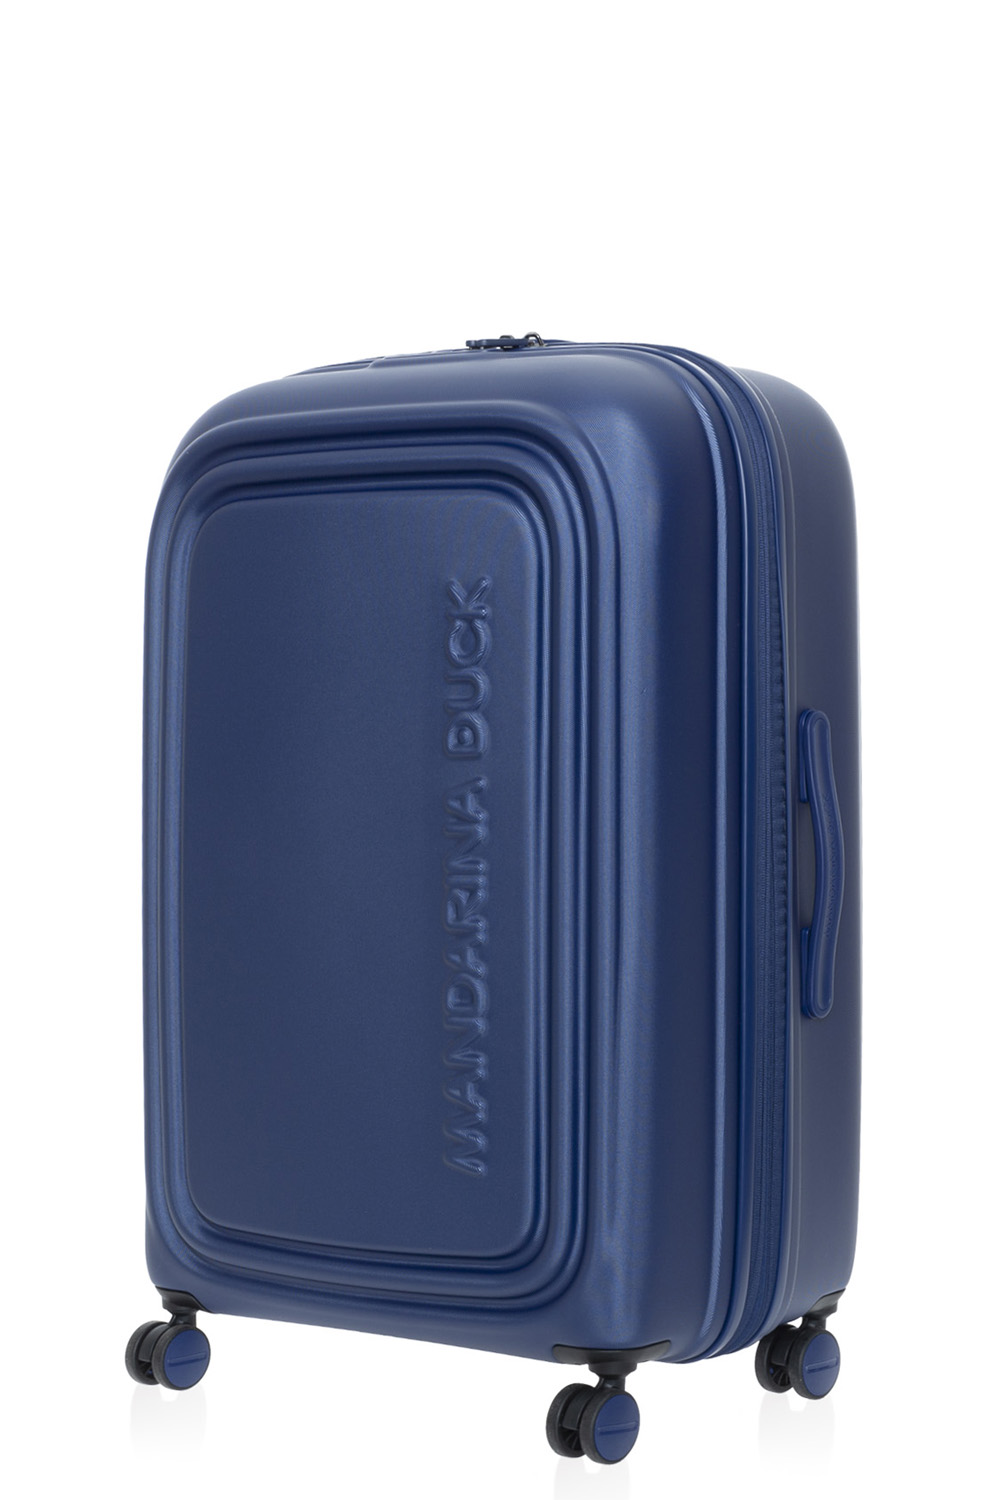 55x40x20cm Luggage- Suitcase Unisex-Adult Trolley Cabin / Estate Blue P10SZV5419R Sommerblau Mandarina Duck LOGODUCK 